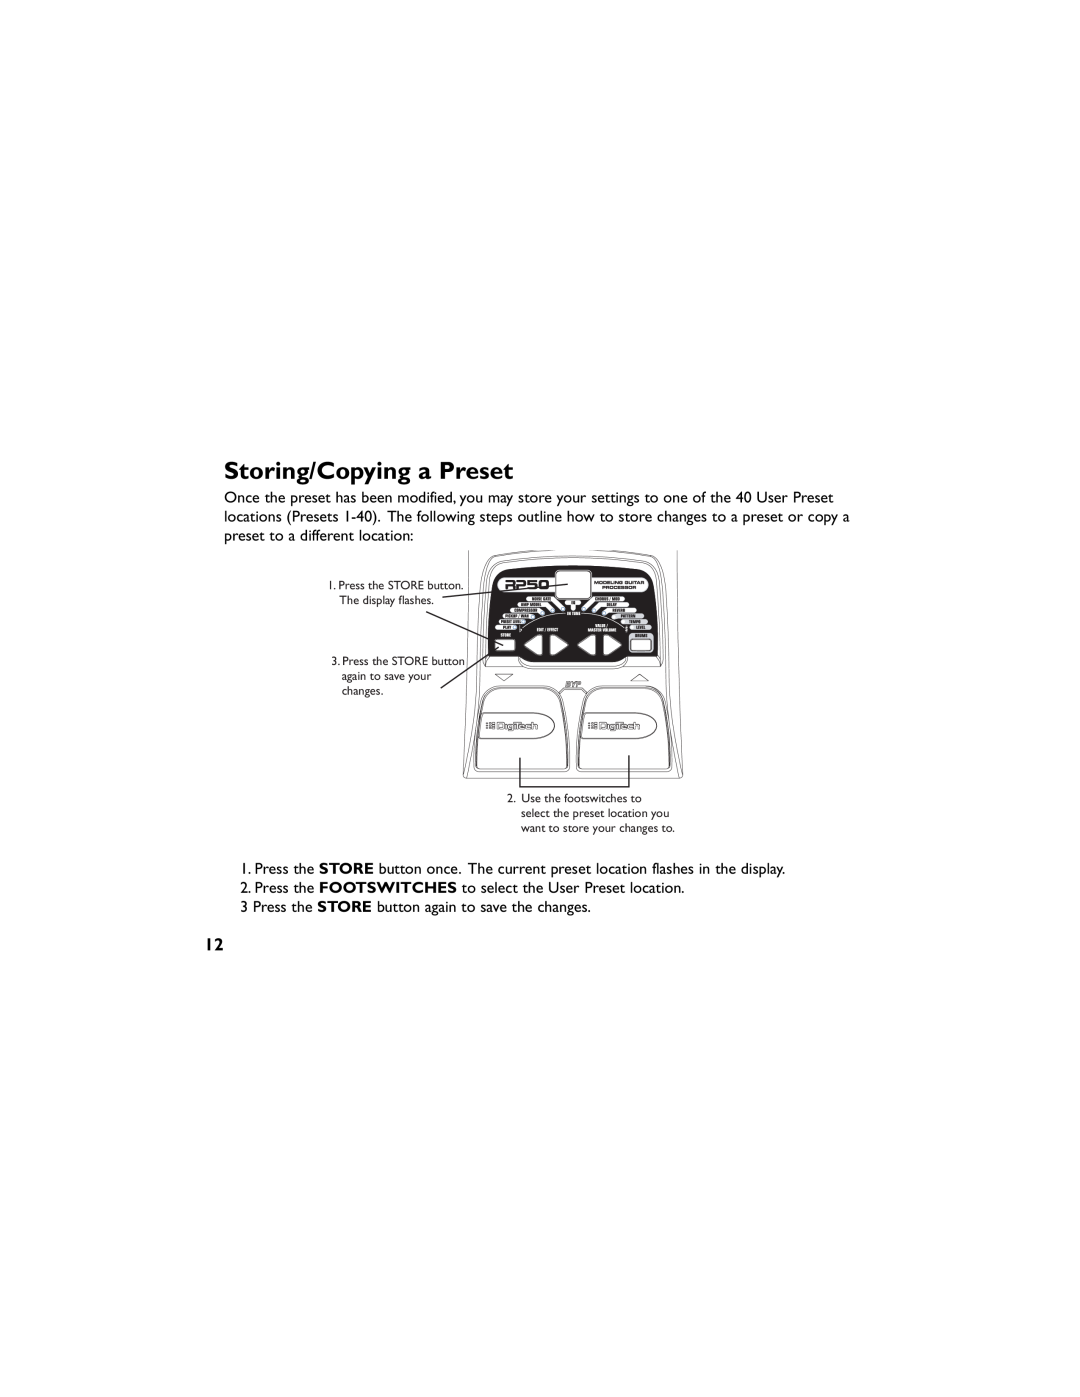 DigiTech RP50 manual Storing/Copying a Preset 